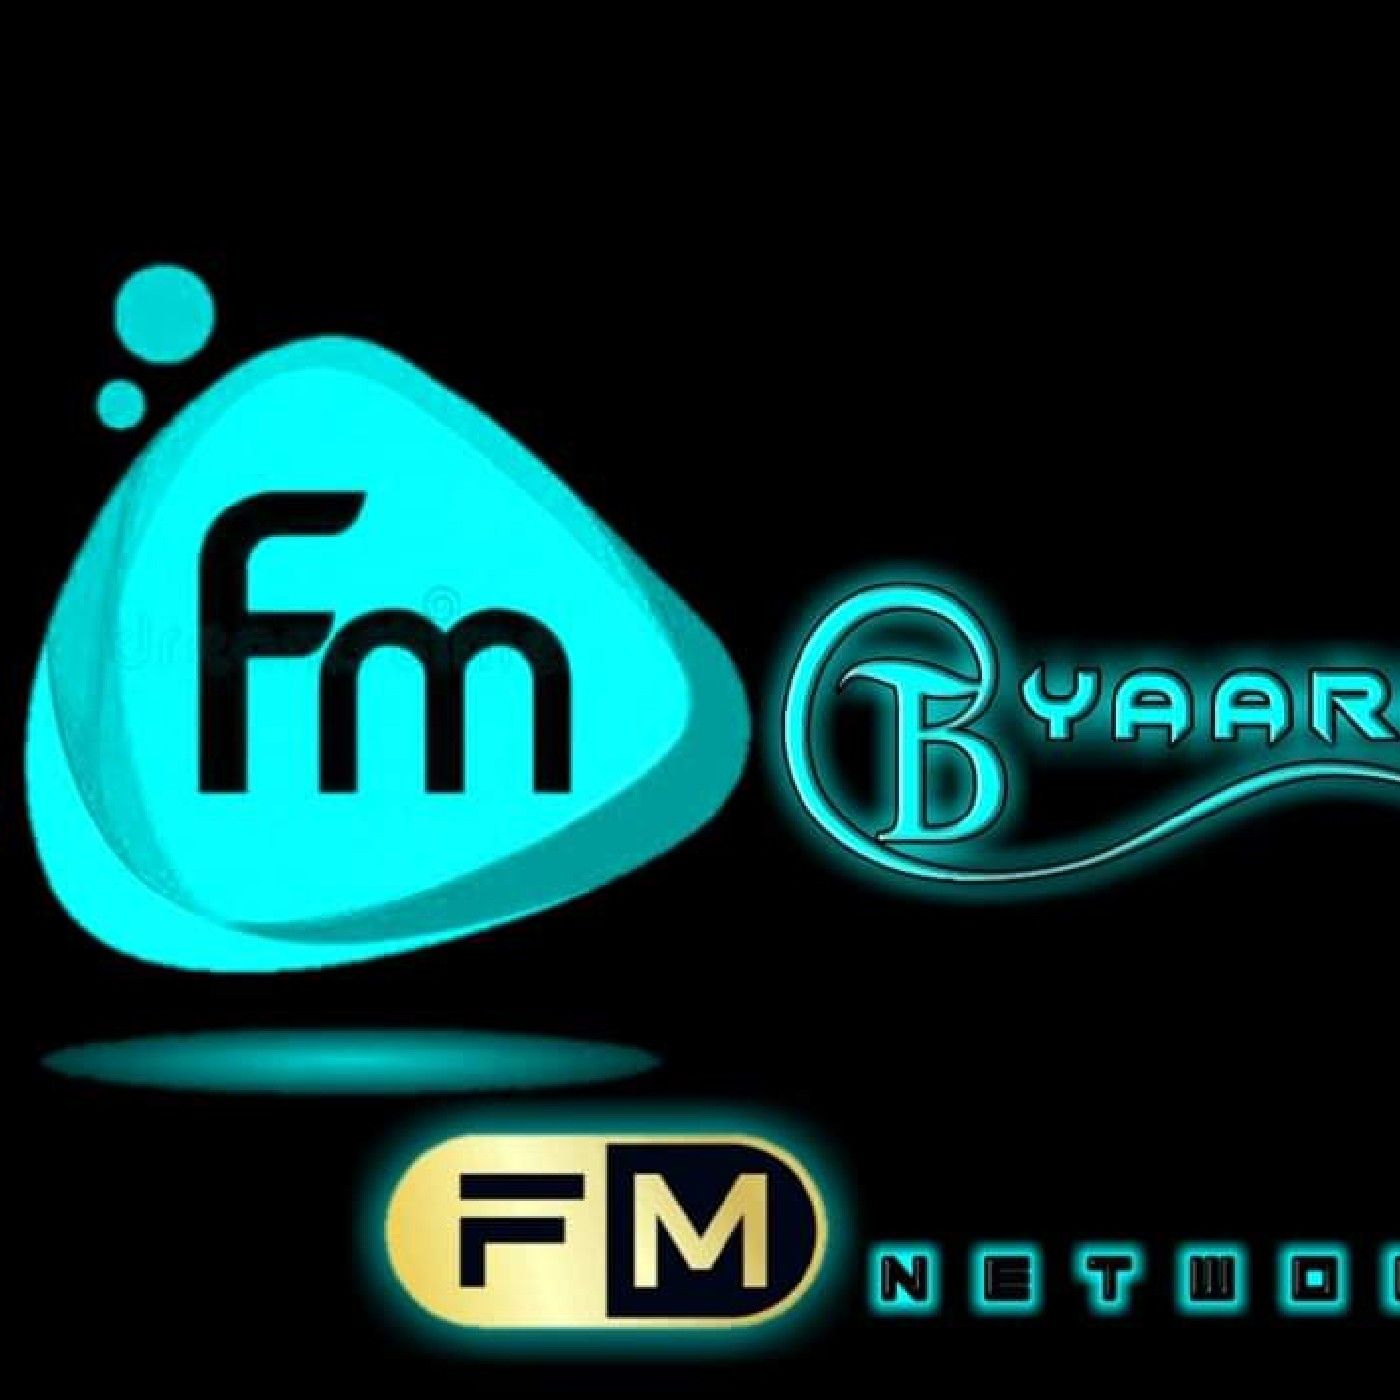 B - YAARAN FM NETWORK